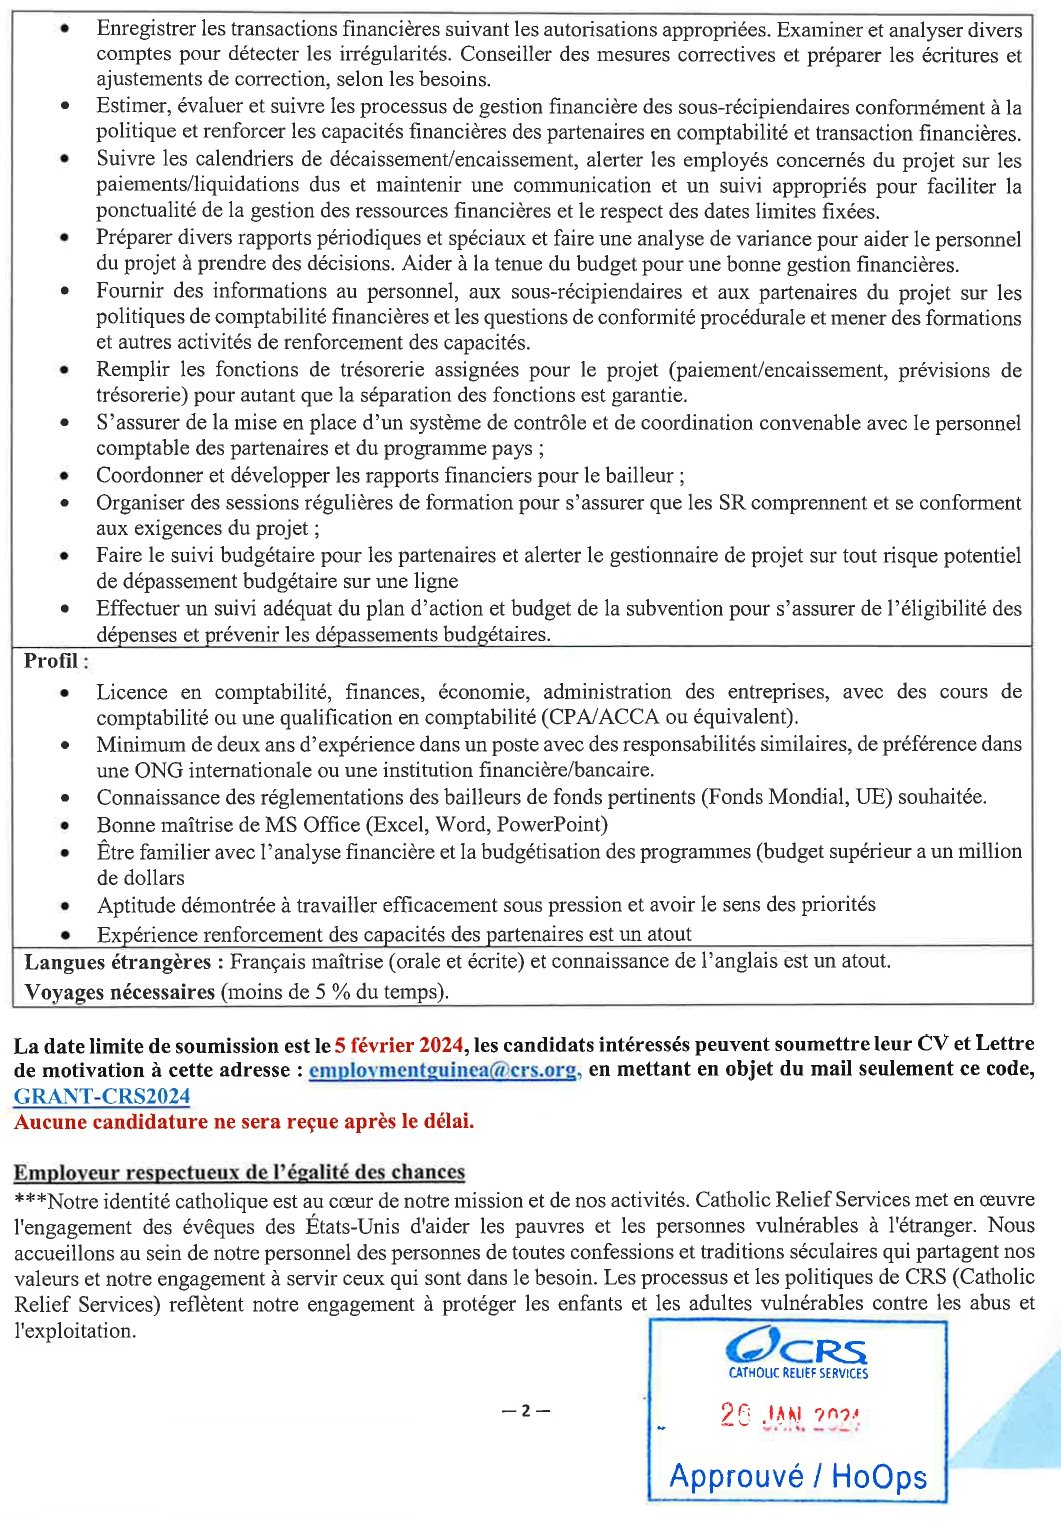  AVIS DE RECRUTEMENT DE DEUX GRANTS ACCOUNTANTS | Page 2